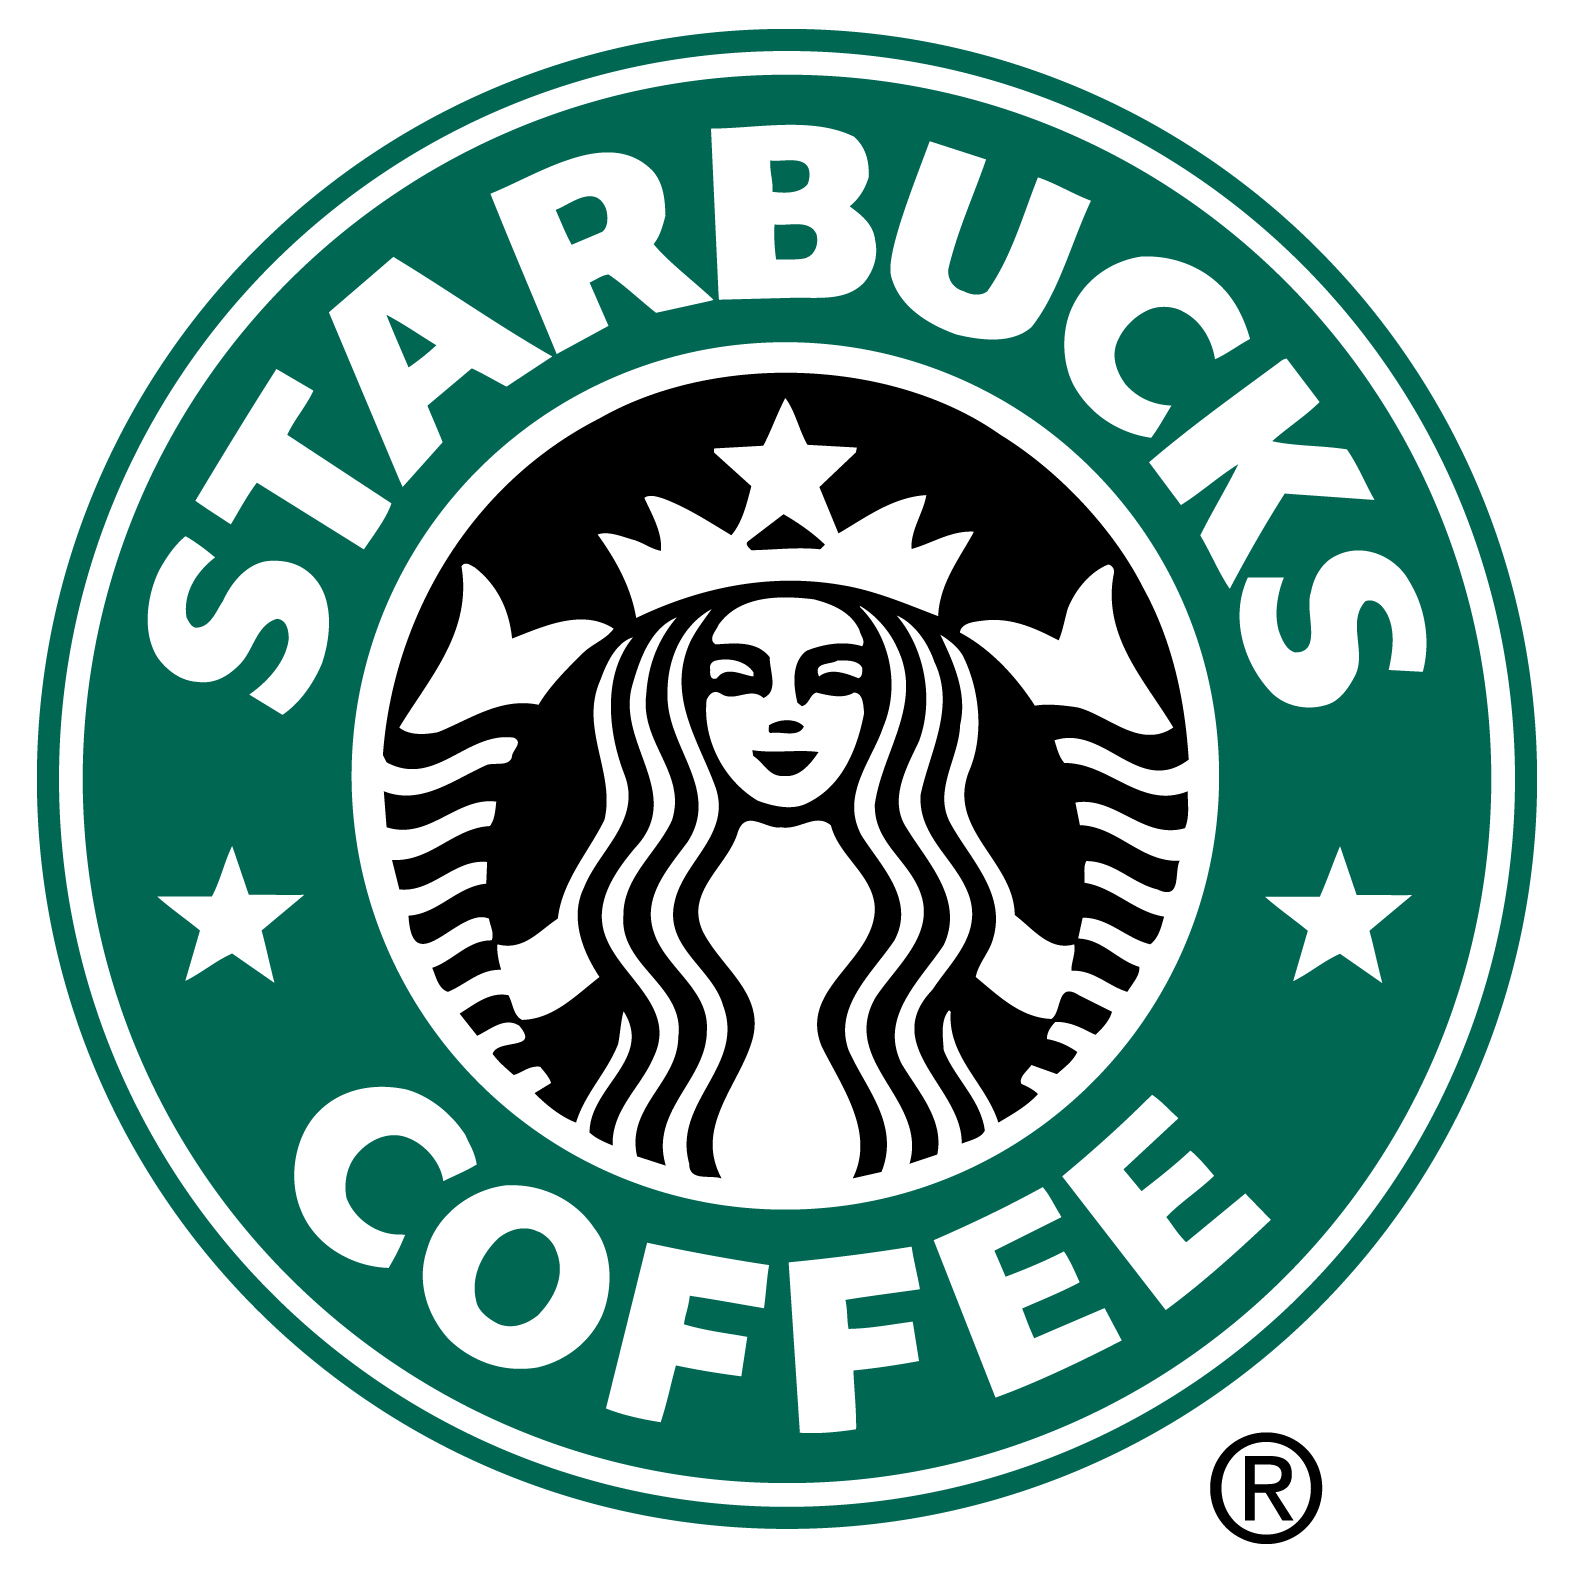 Starbucks logo RGB.jpeg